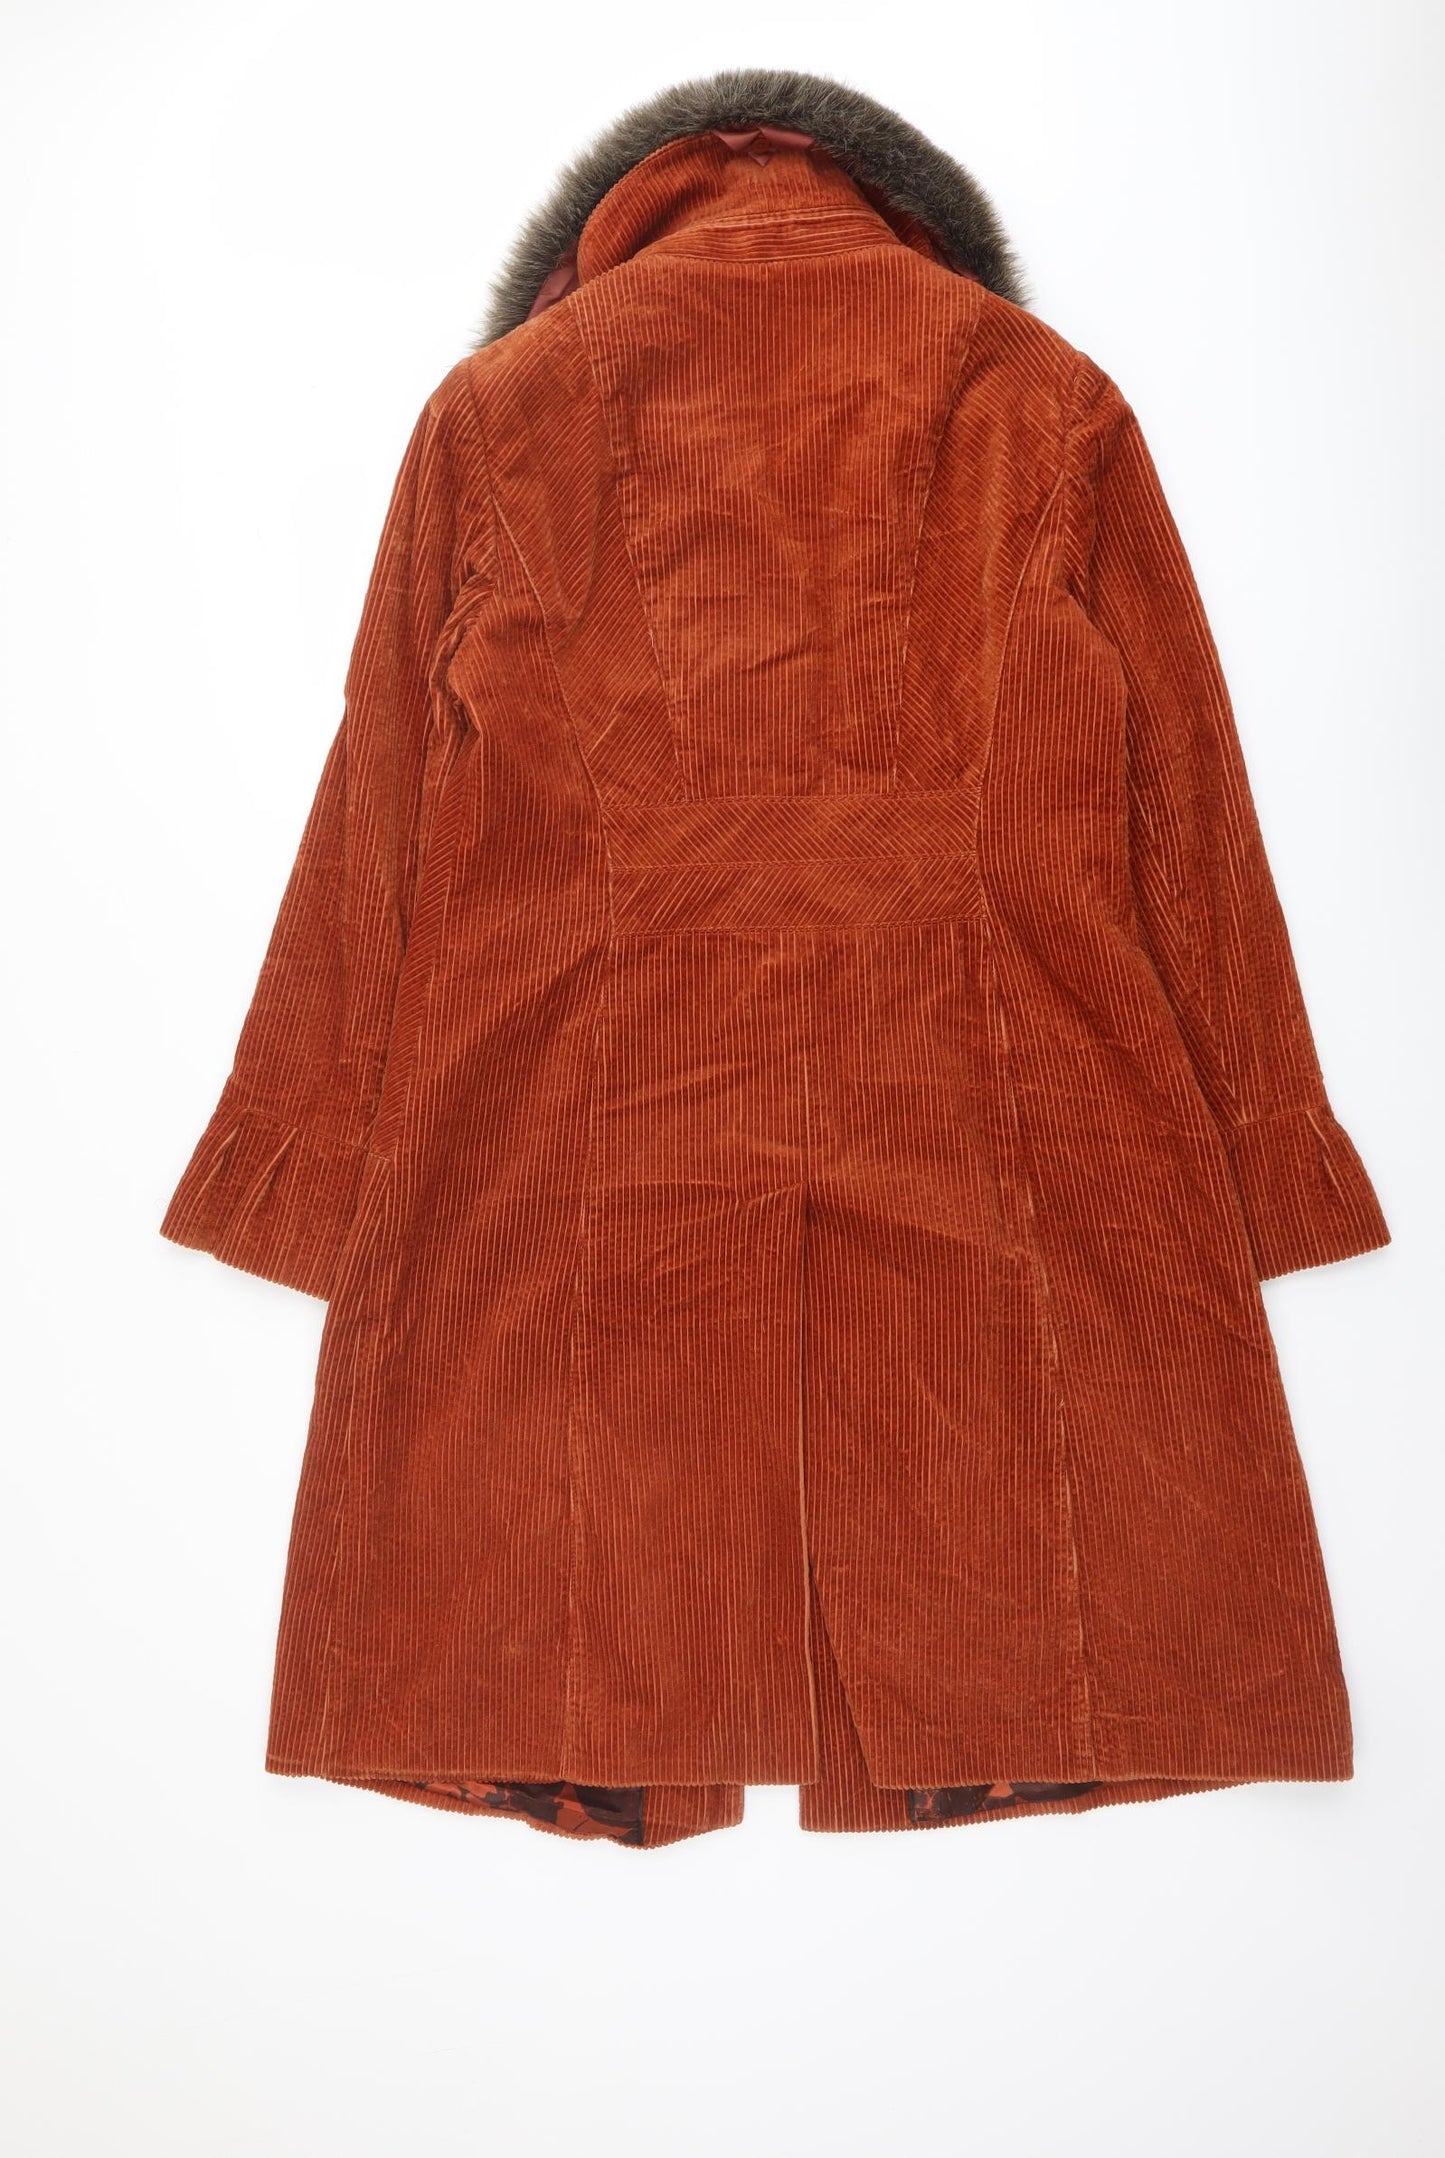 Per Una Womens Red Overcoat Coat Size 12 Button